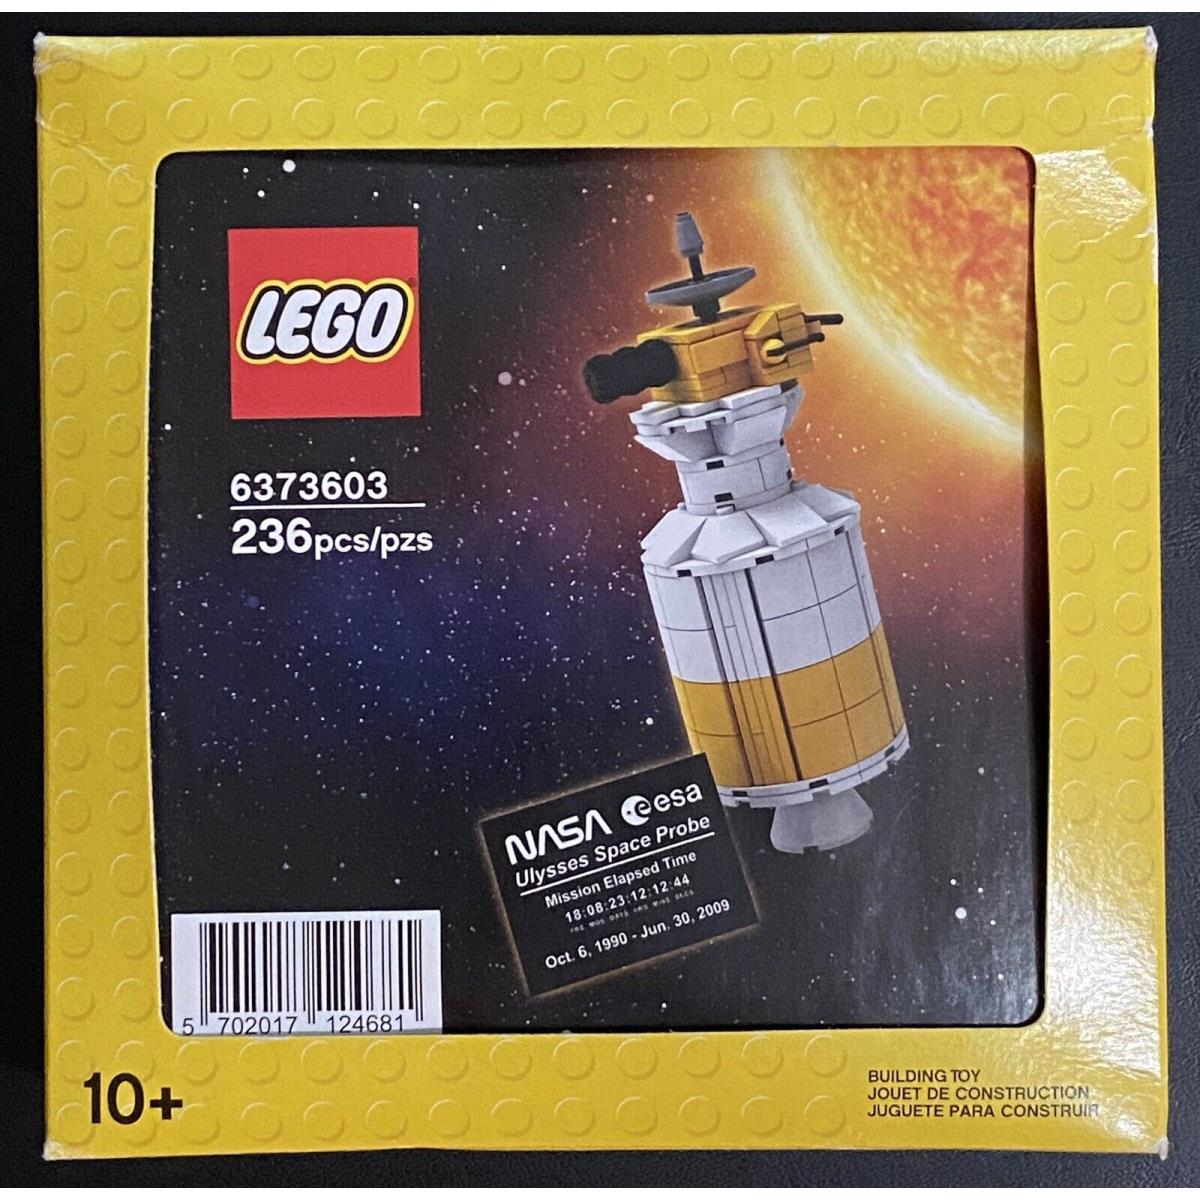 Lego 6373603 Nasa Ulysses Space Probe Exclusive Vip Limited Edition Rare Promo